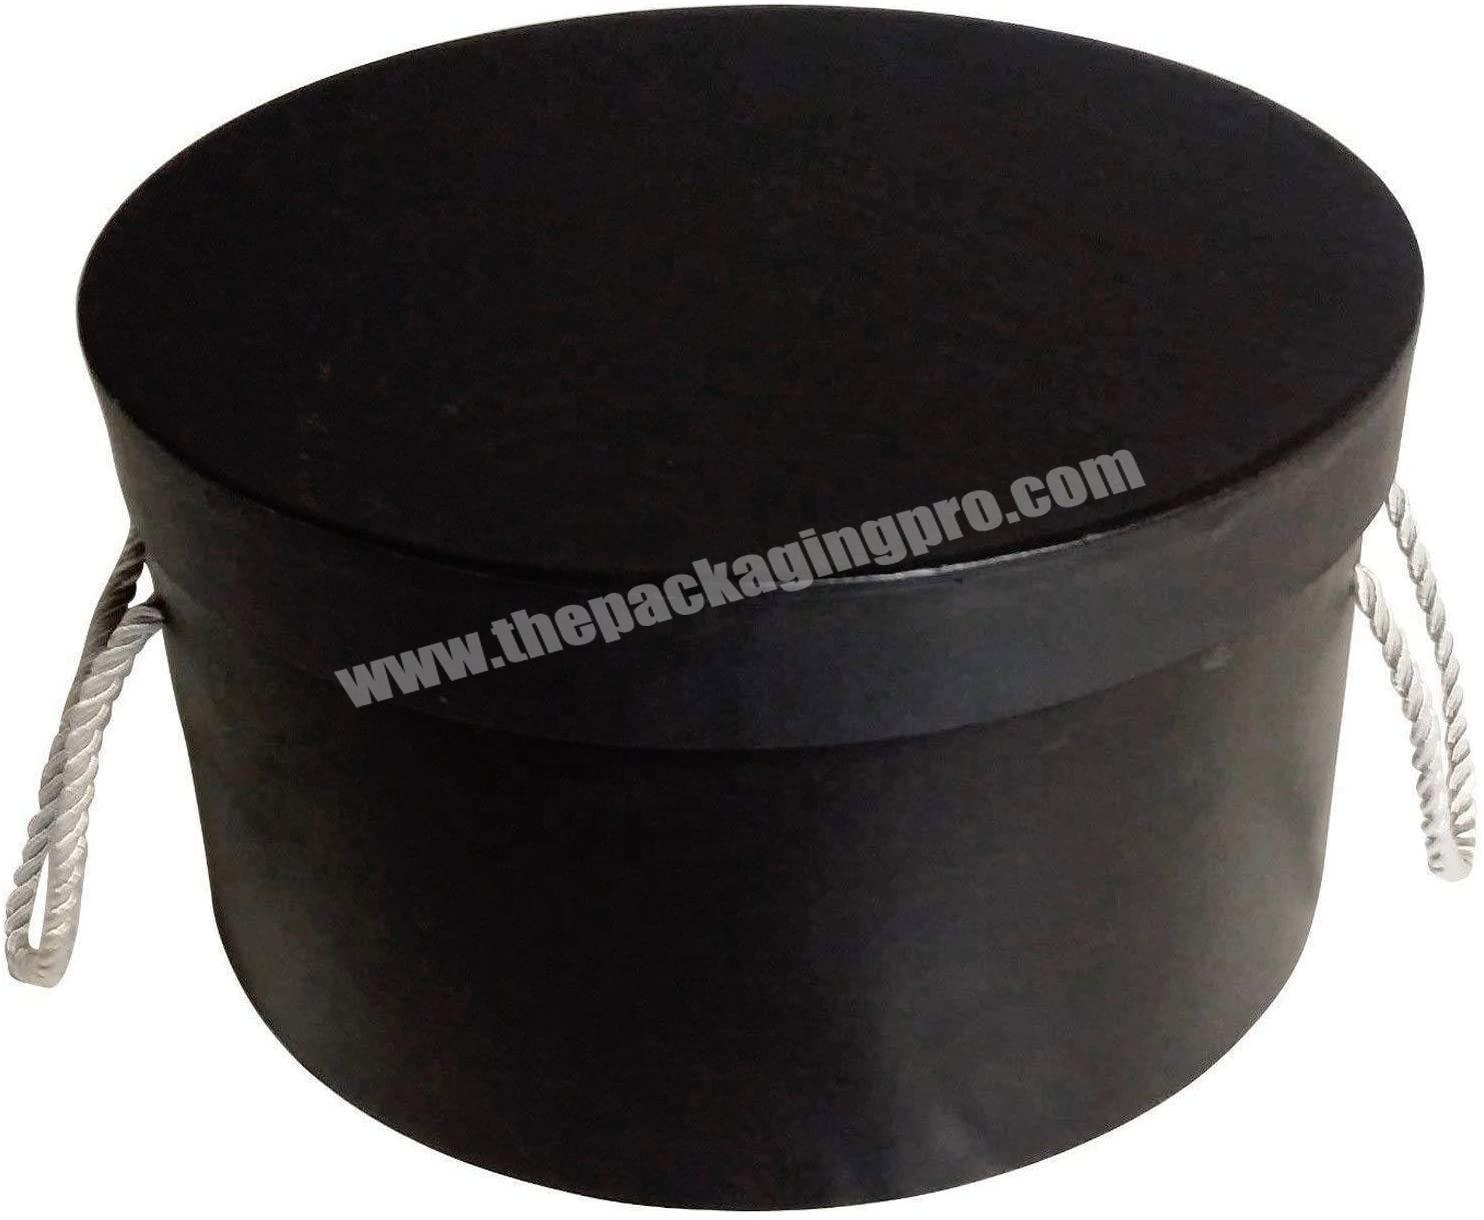 Crafts round plain hat box storage box with velvet rope handle